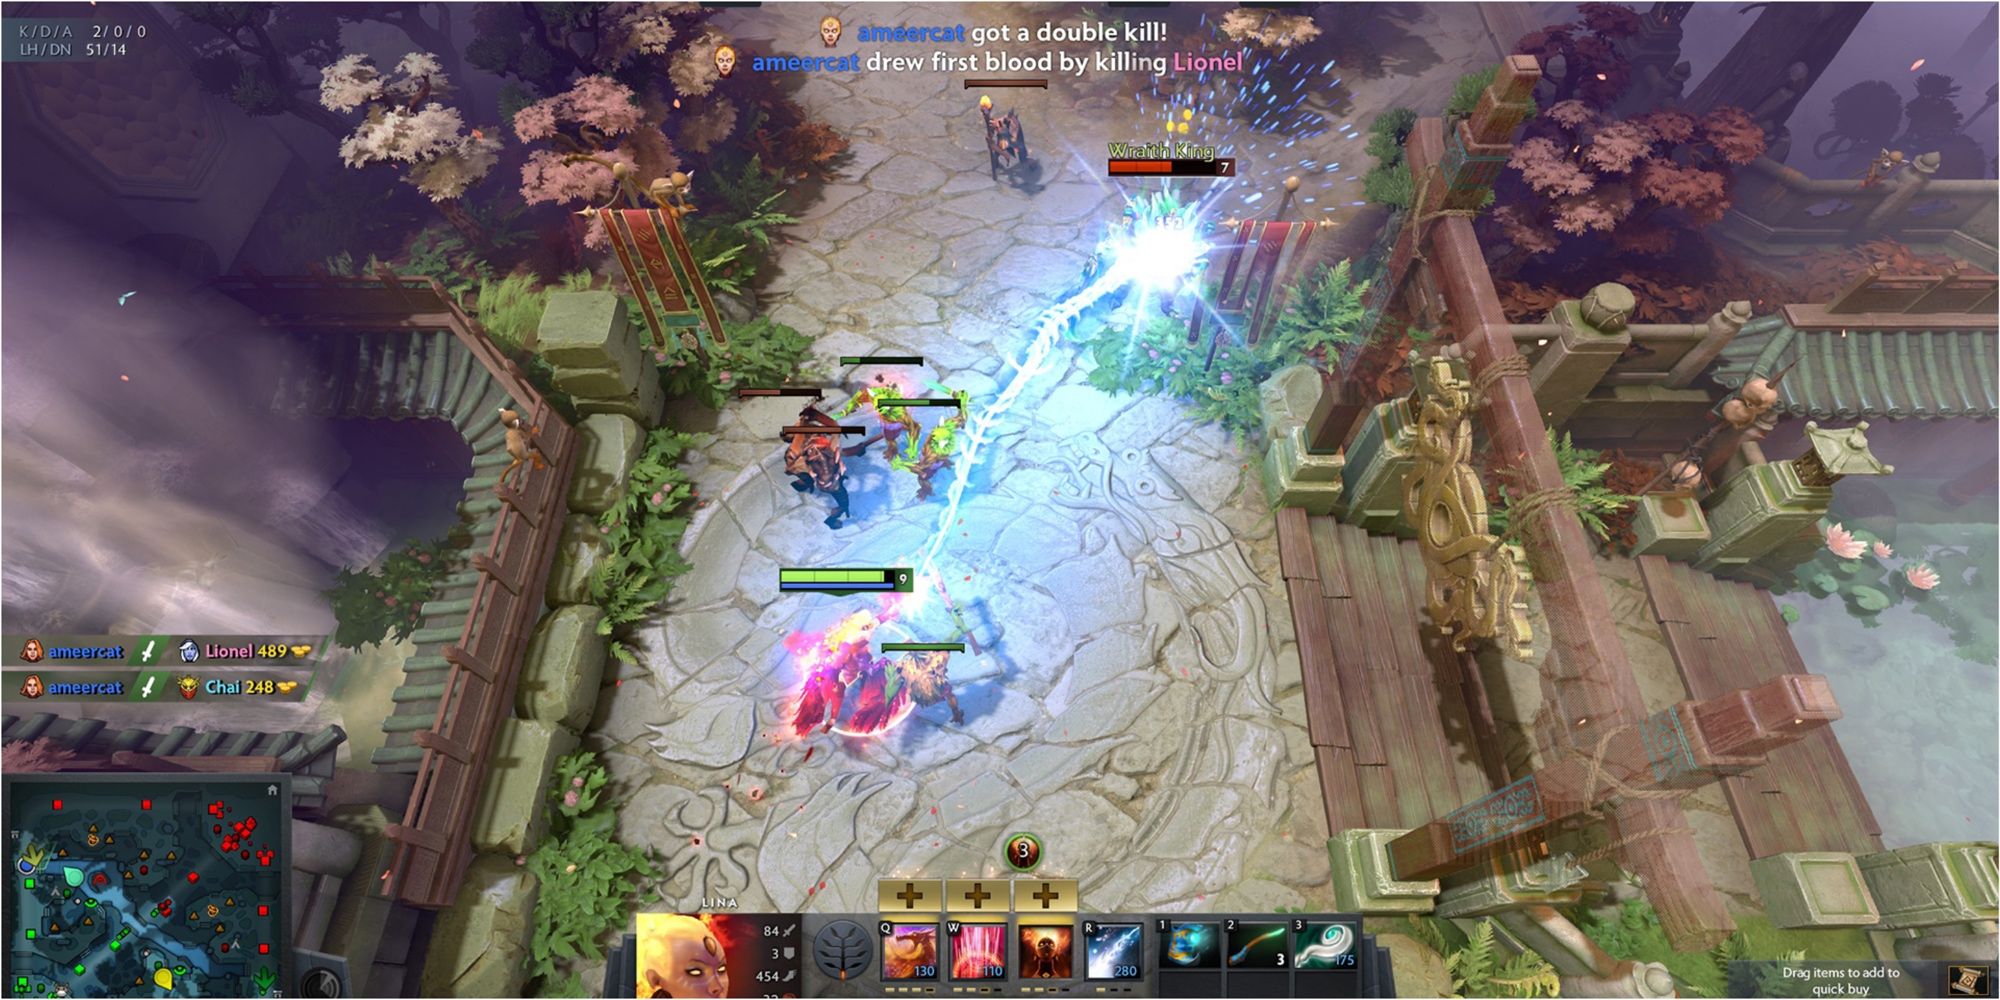 Dota 2 gameplay screenshot of a double kill during battle.